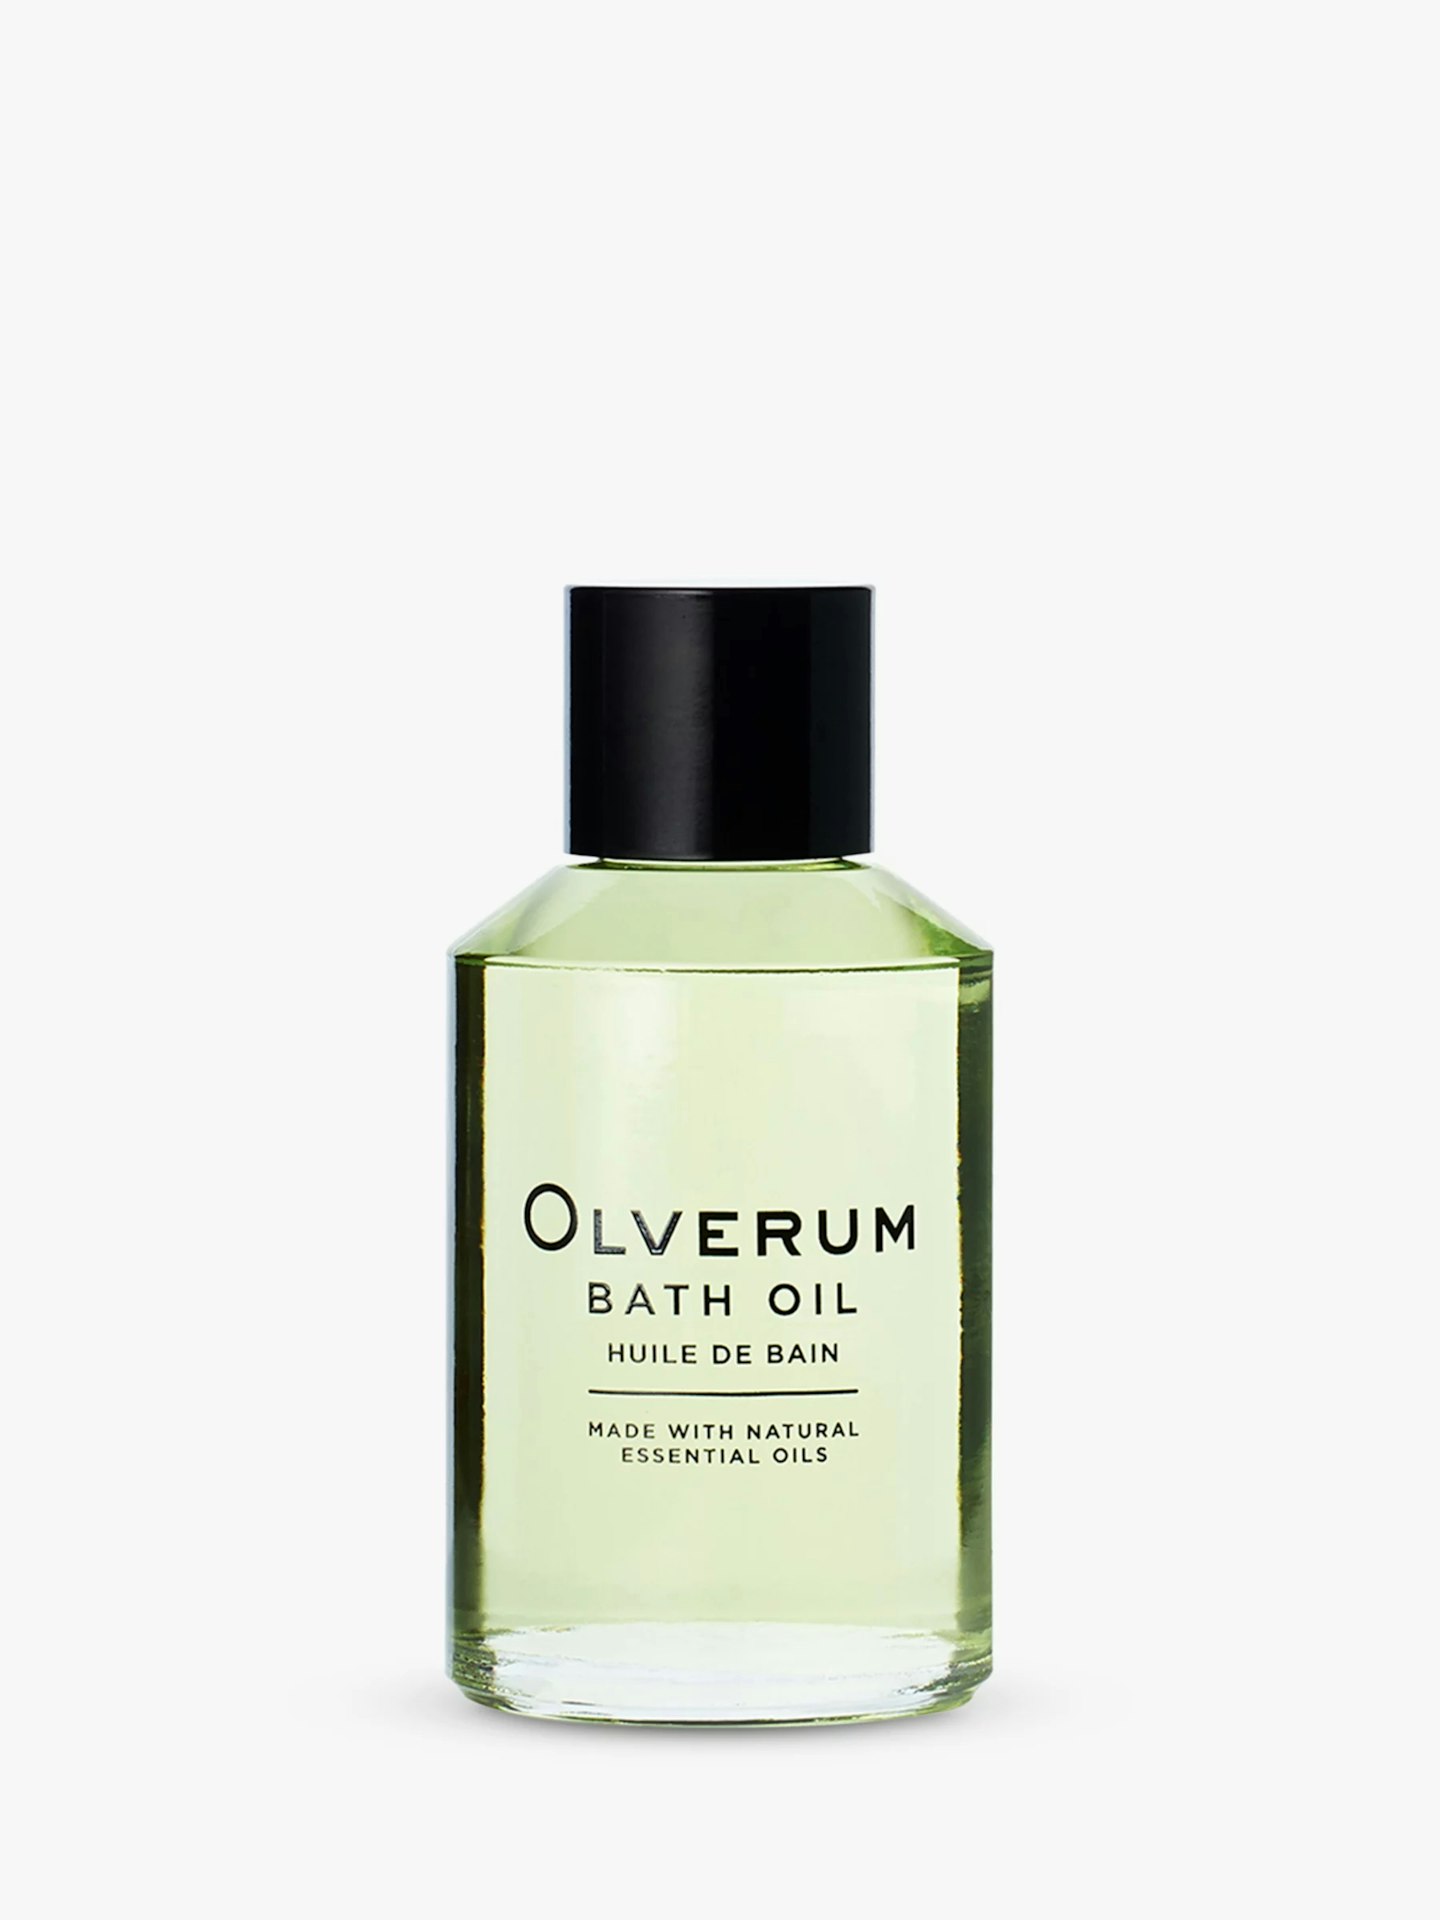 Olverum, Bath Oil, £36.50